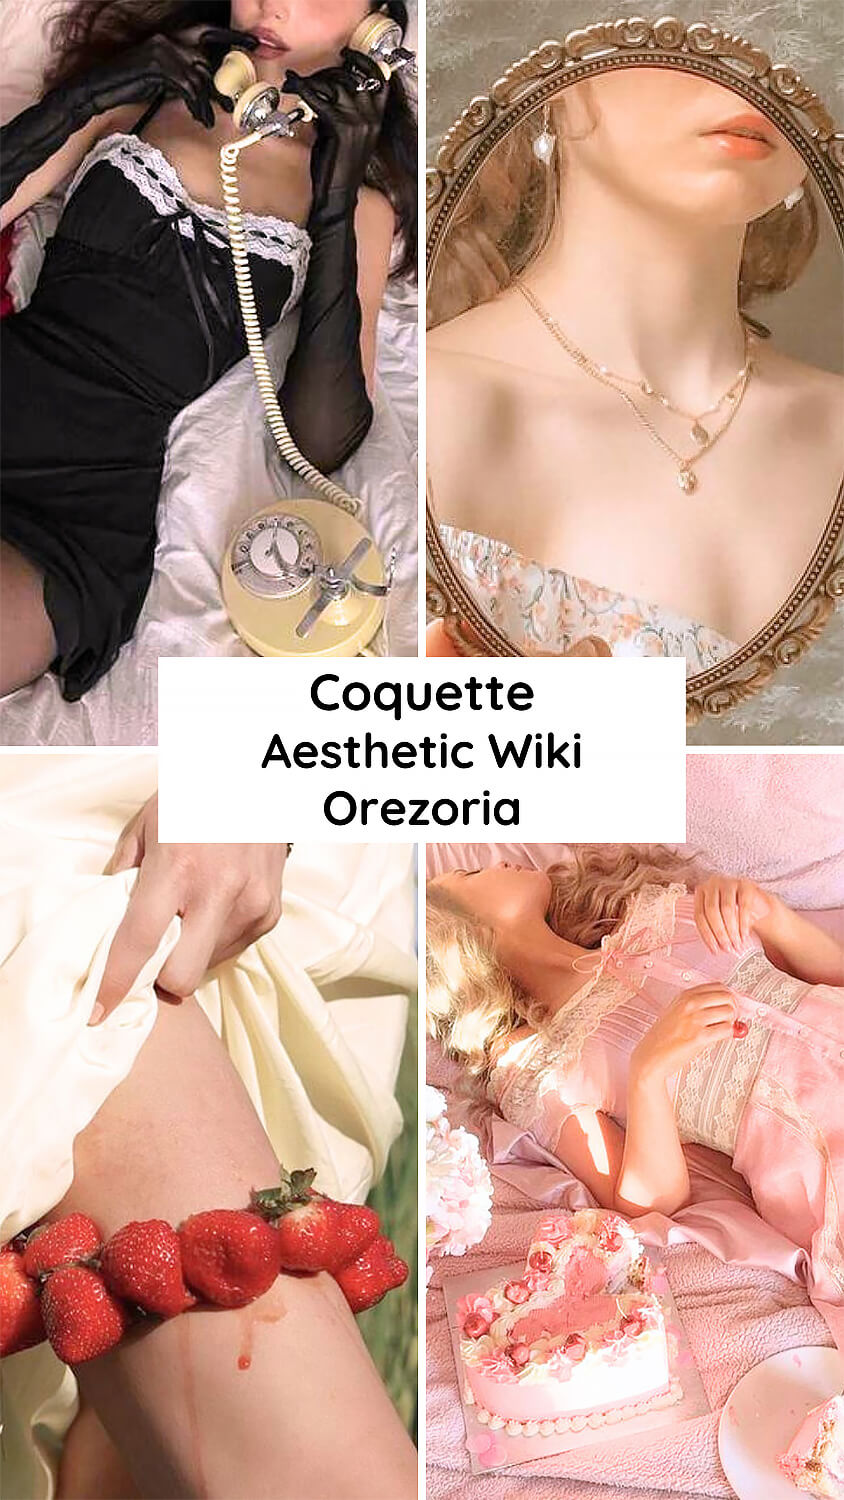 What is the Coquette Aesthetic Aesthetics Wiki Orezoria